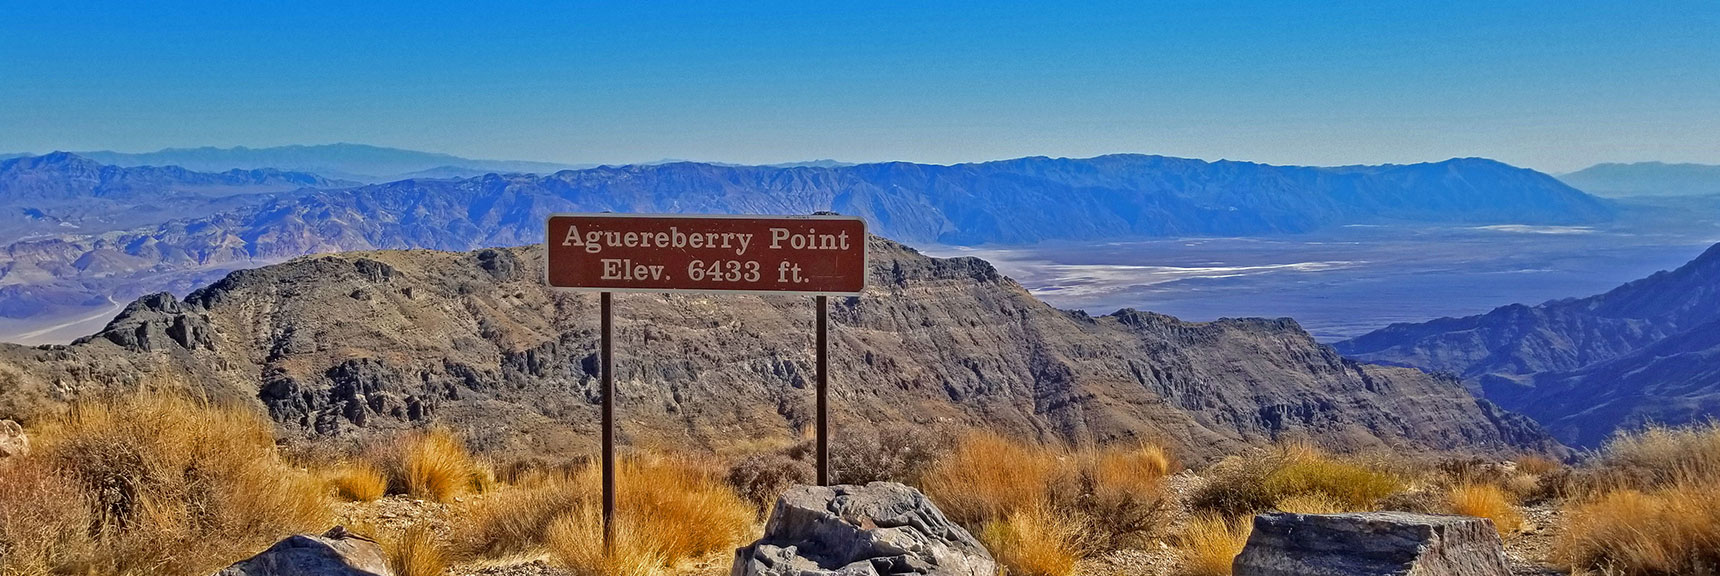 Arrival at Aguereberry Point, View Toward Badwater Basin and Dante's View | Aguereberry Point | Panamint Mountain Range | Death Valley National Park, California